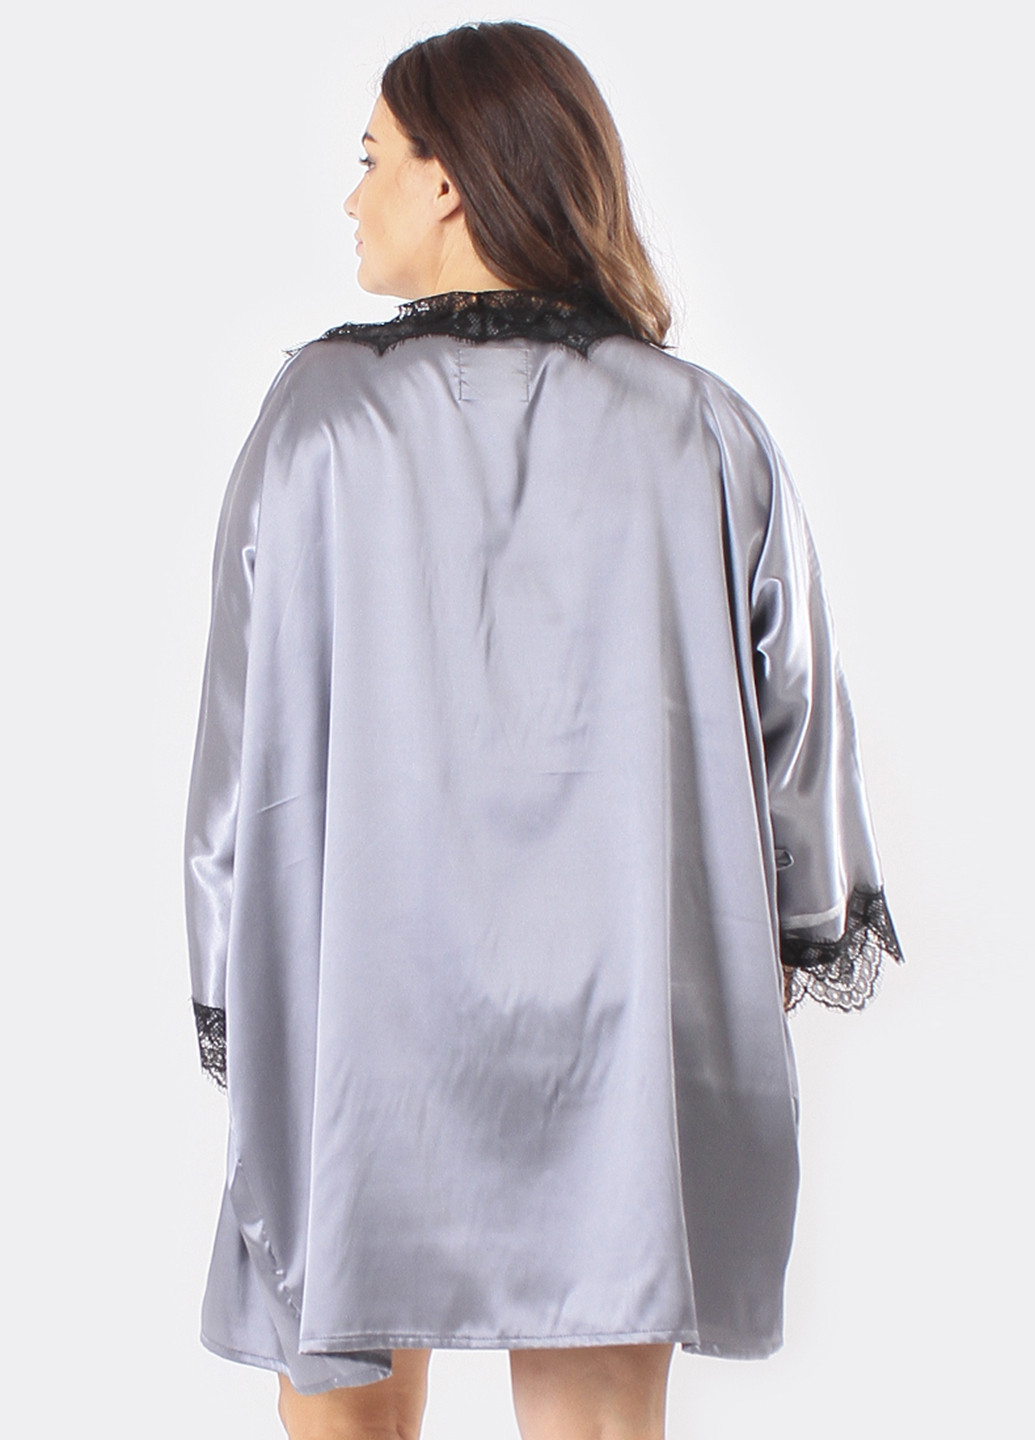 Серый демисезонный комплект (халат, майка, шорты) Ghazel